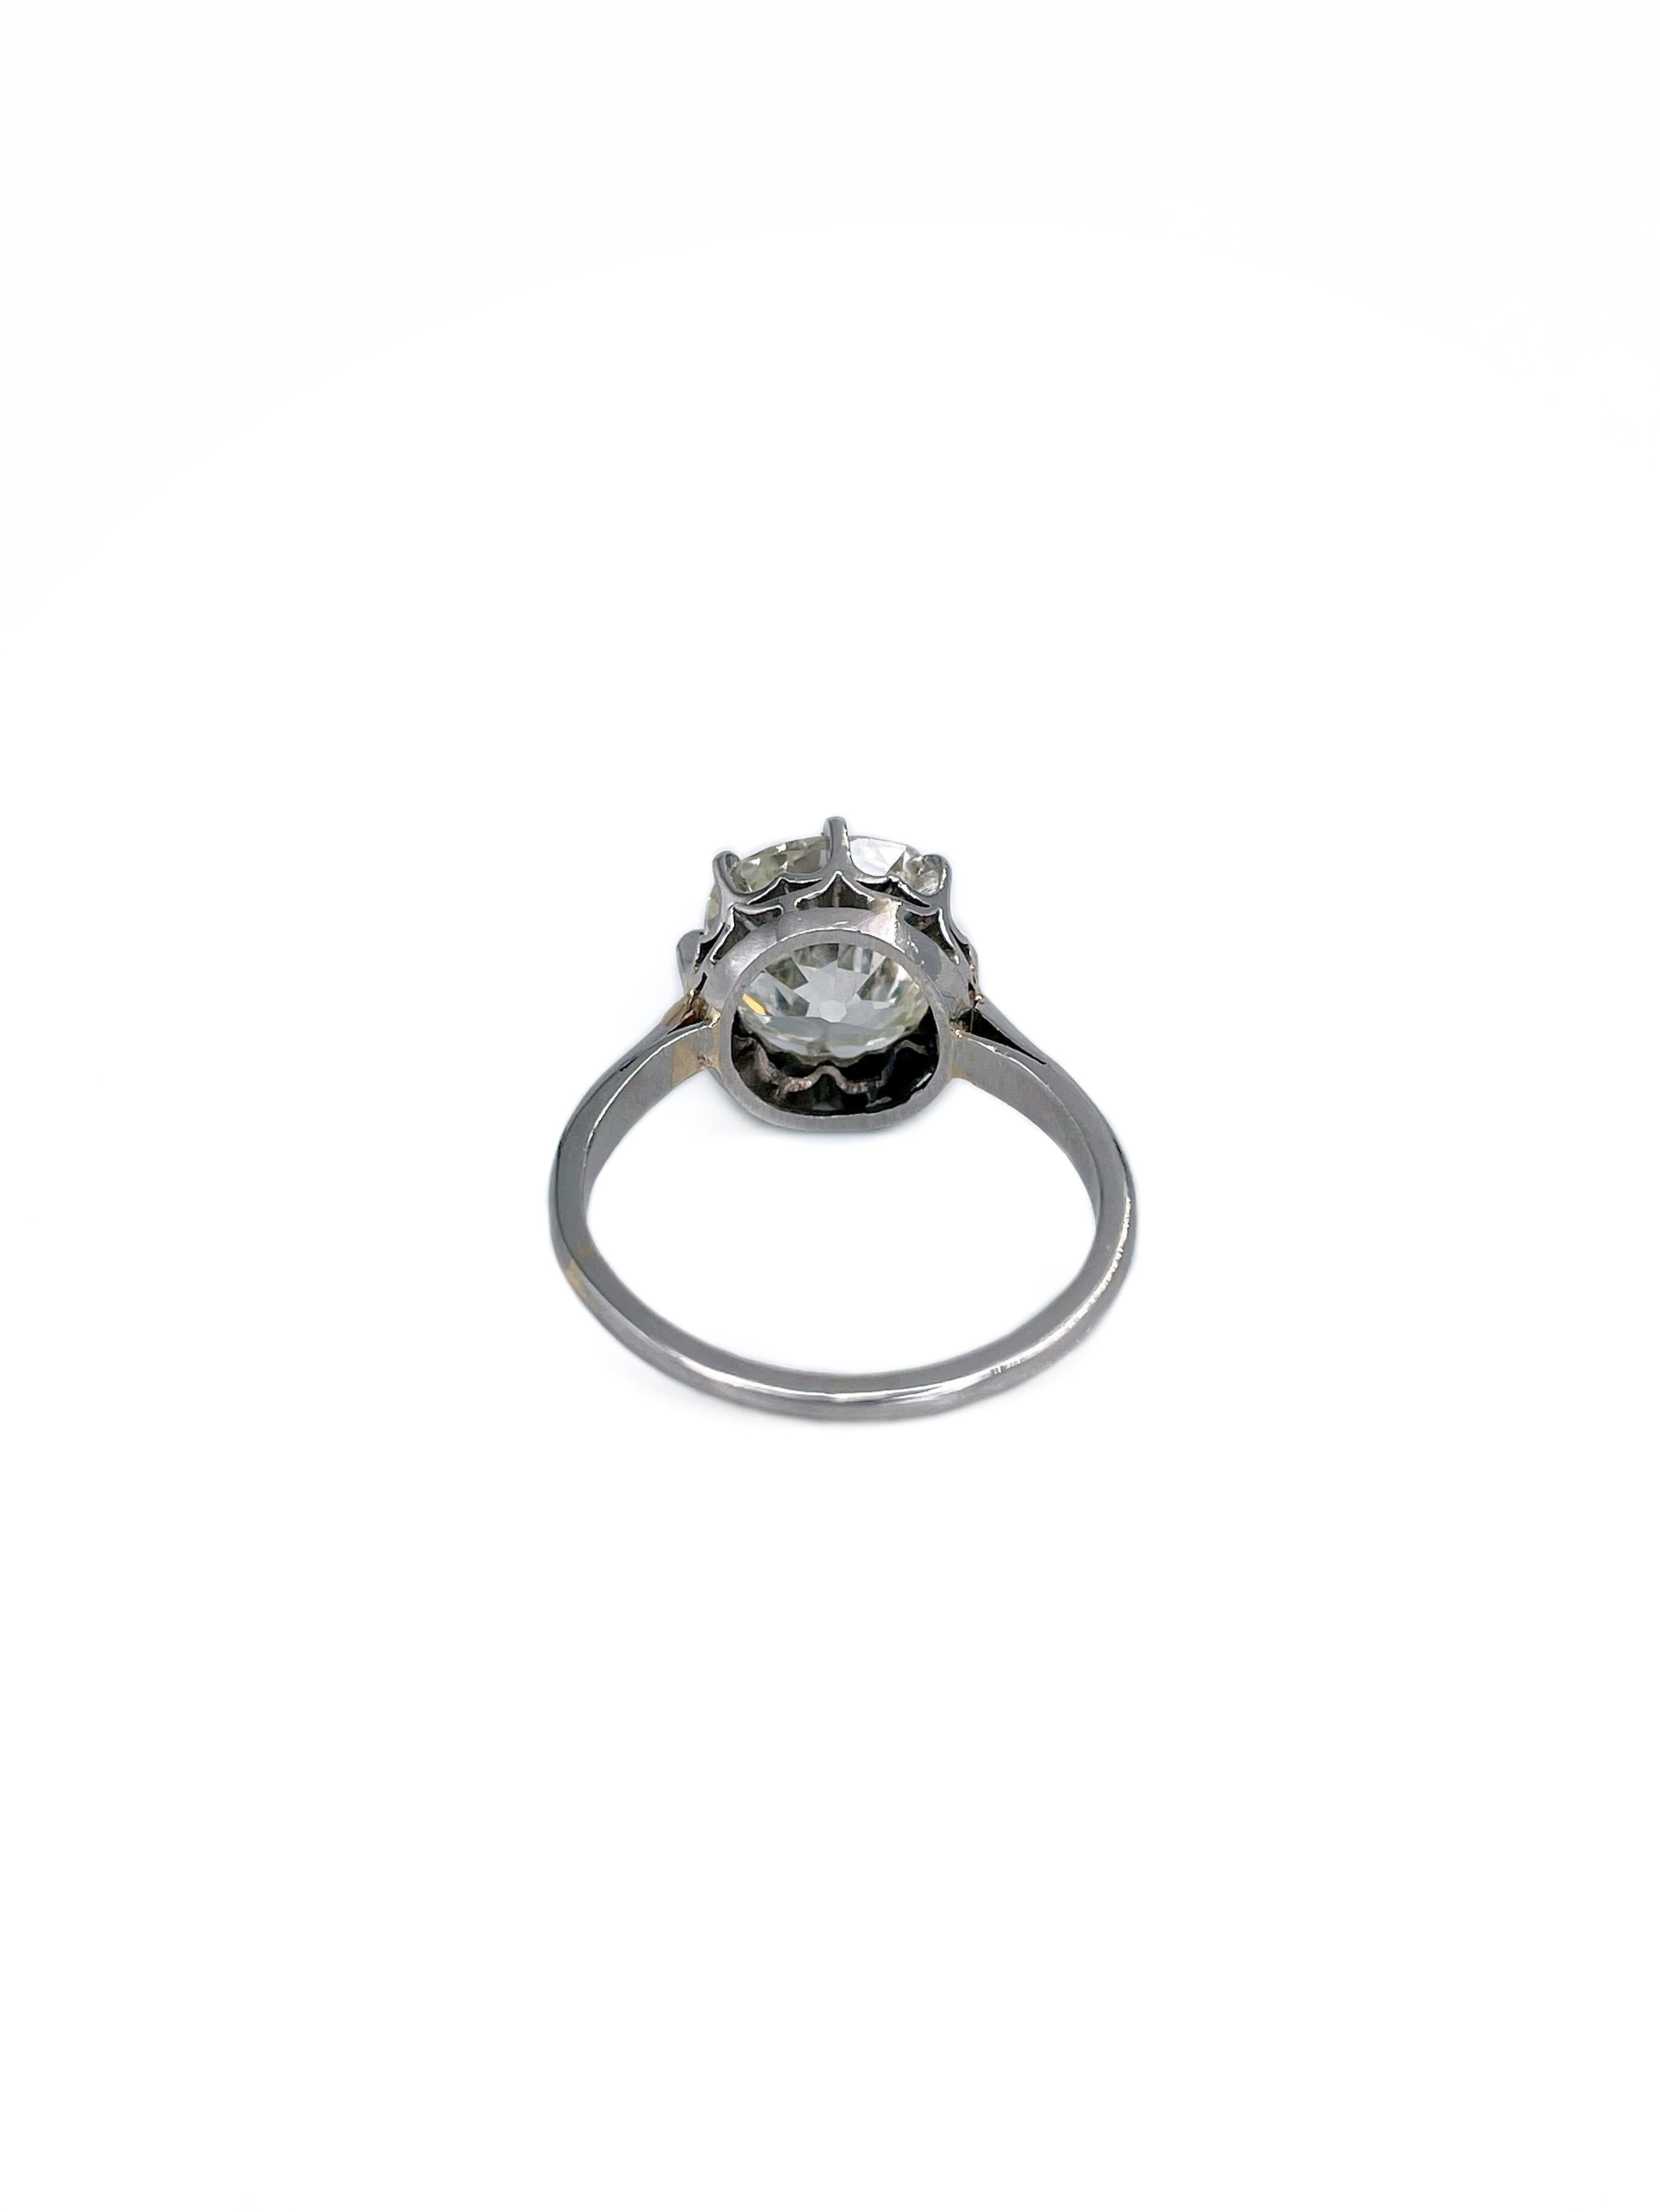 Women's Certified 900 Platinum 3.2 Carat Old European Cut Diamond Solitaire Ring